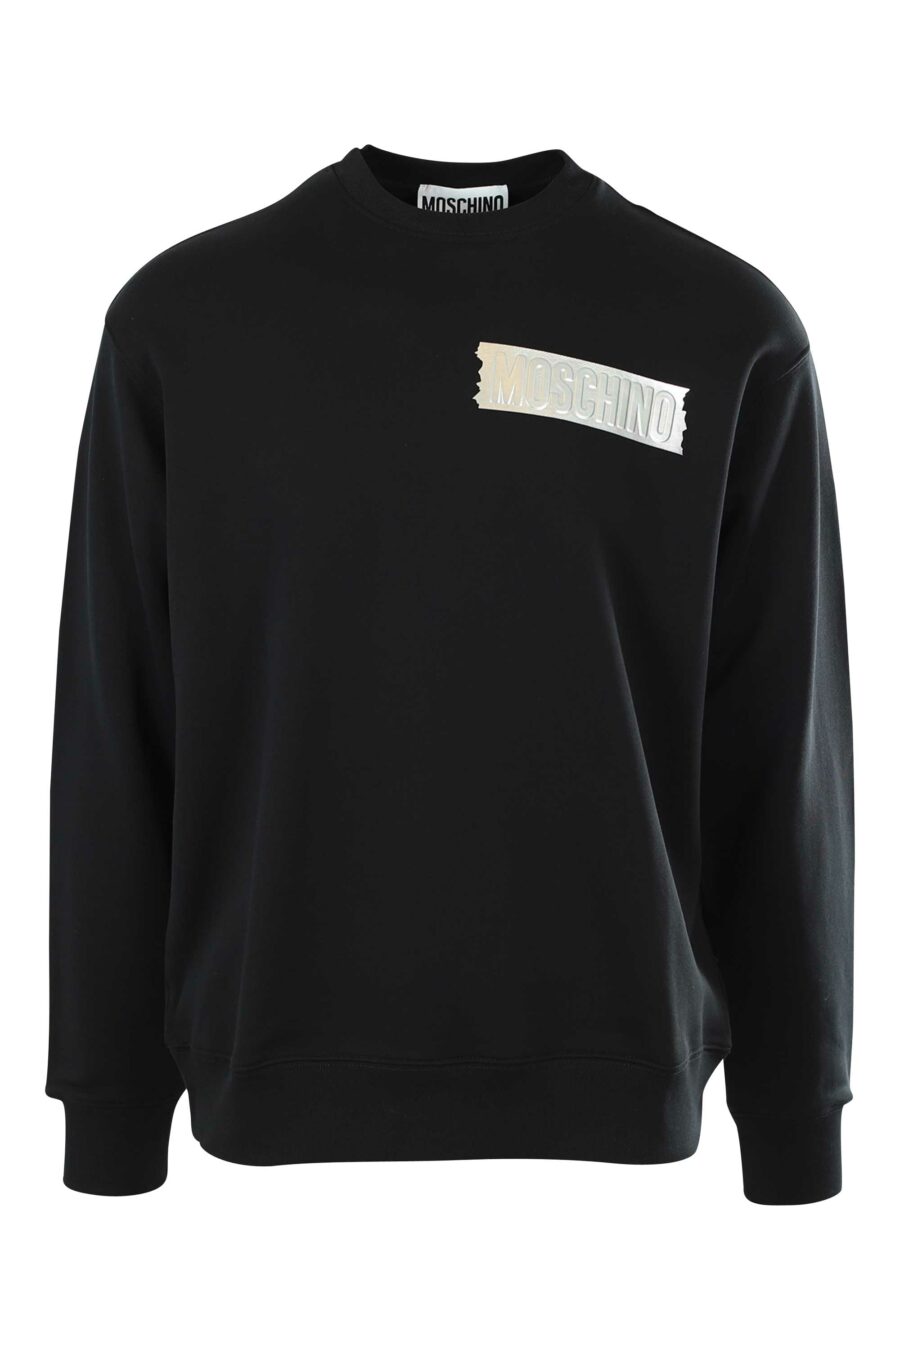 Schwarzes Sweatshirt mit silbernem Eifer-Effekt-Logo - 889316179569